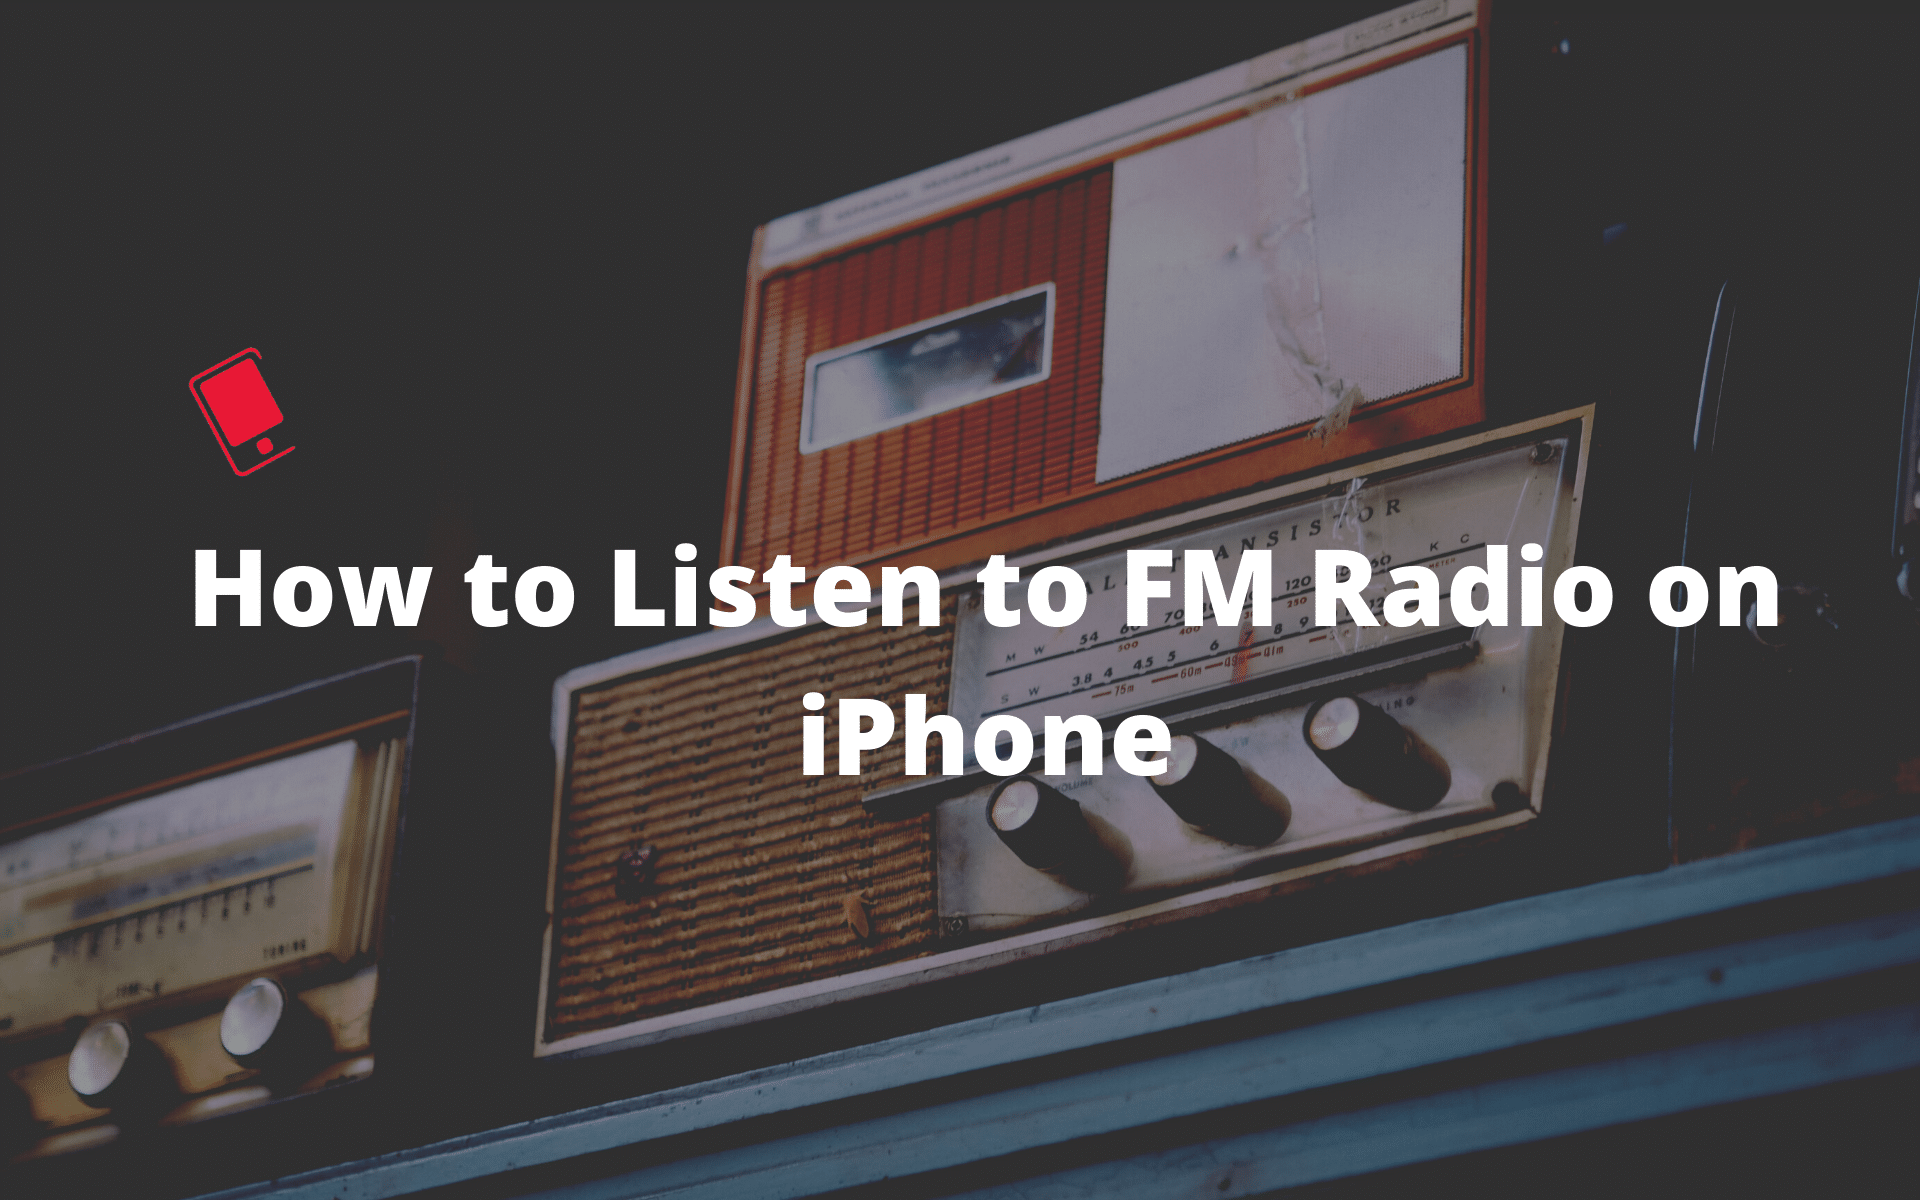 FM Radio on iPhone